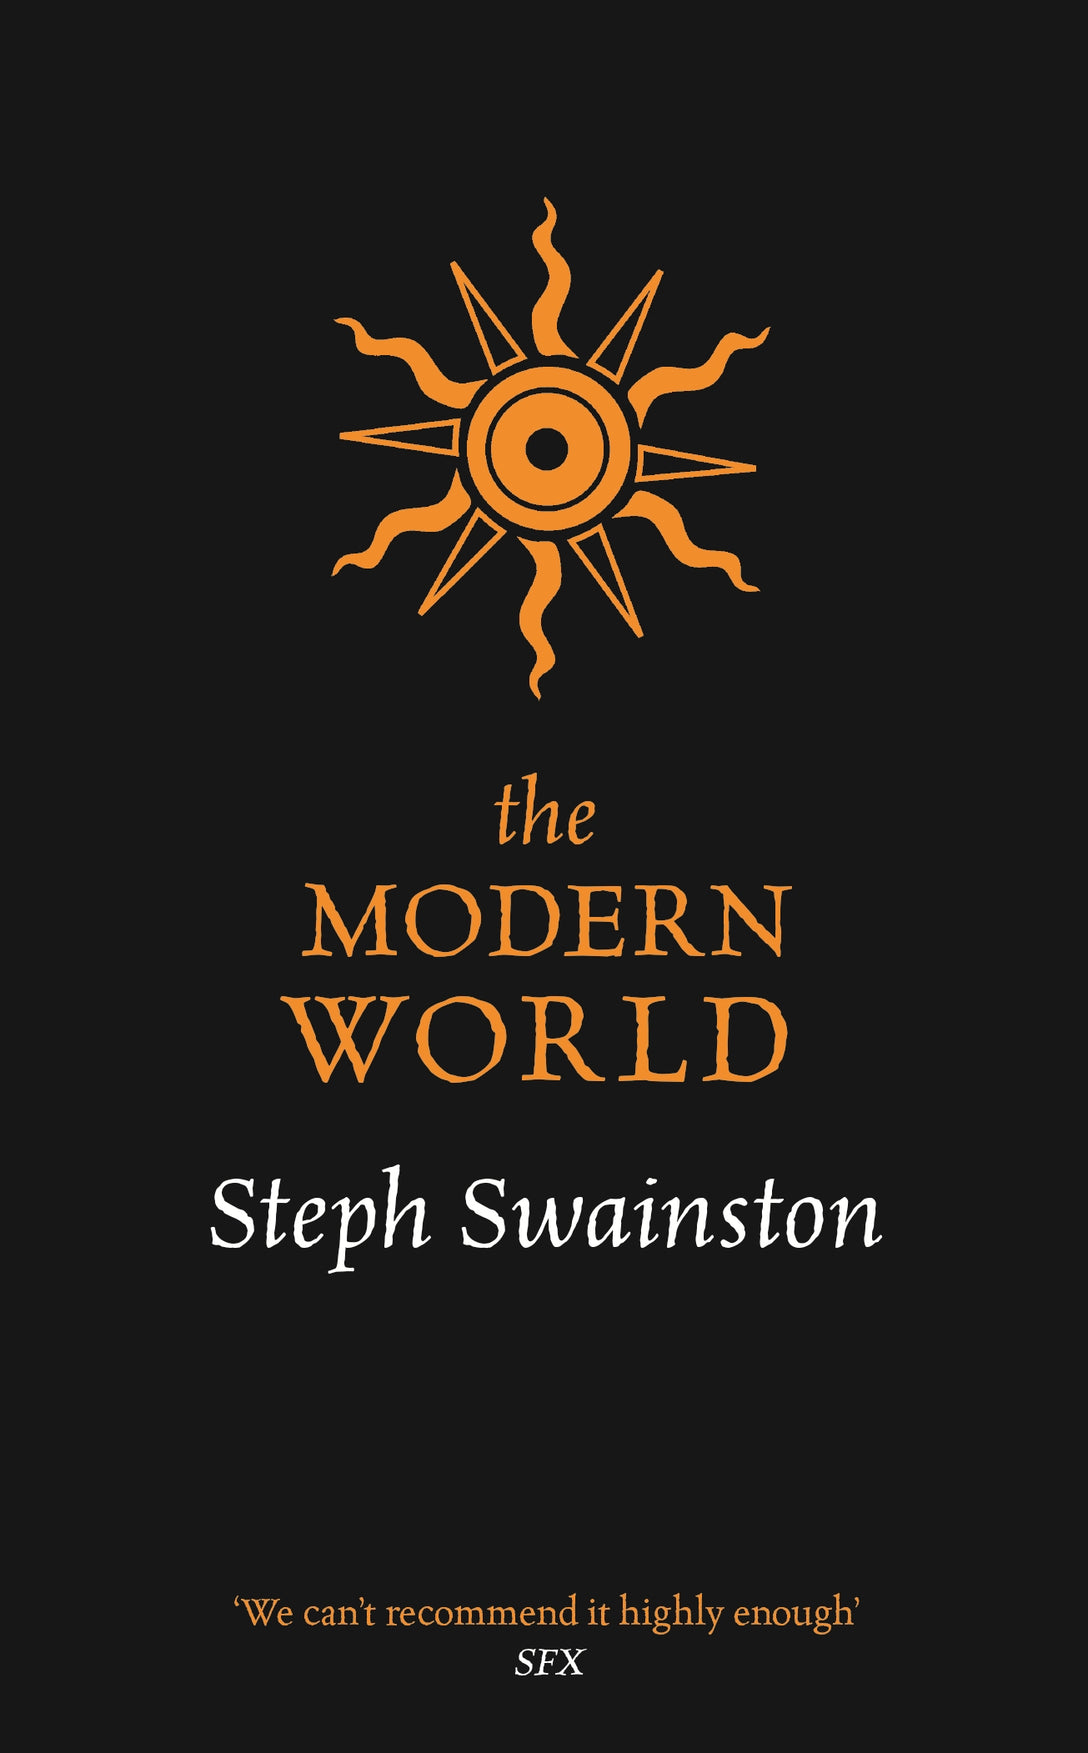 The Modern World by Steph Swainston